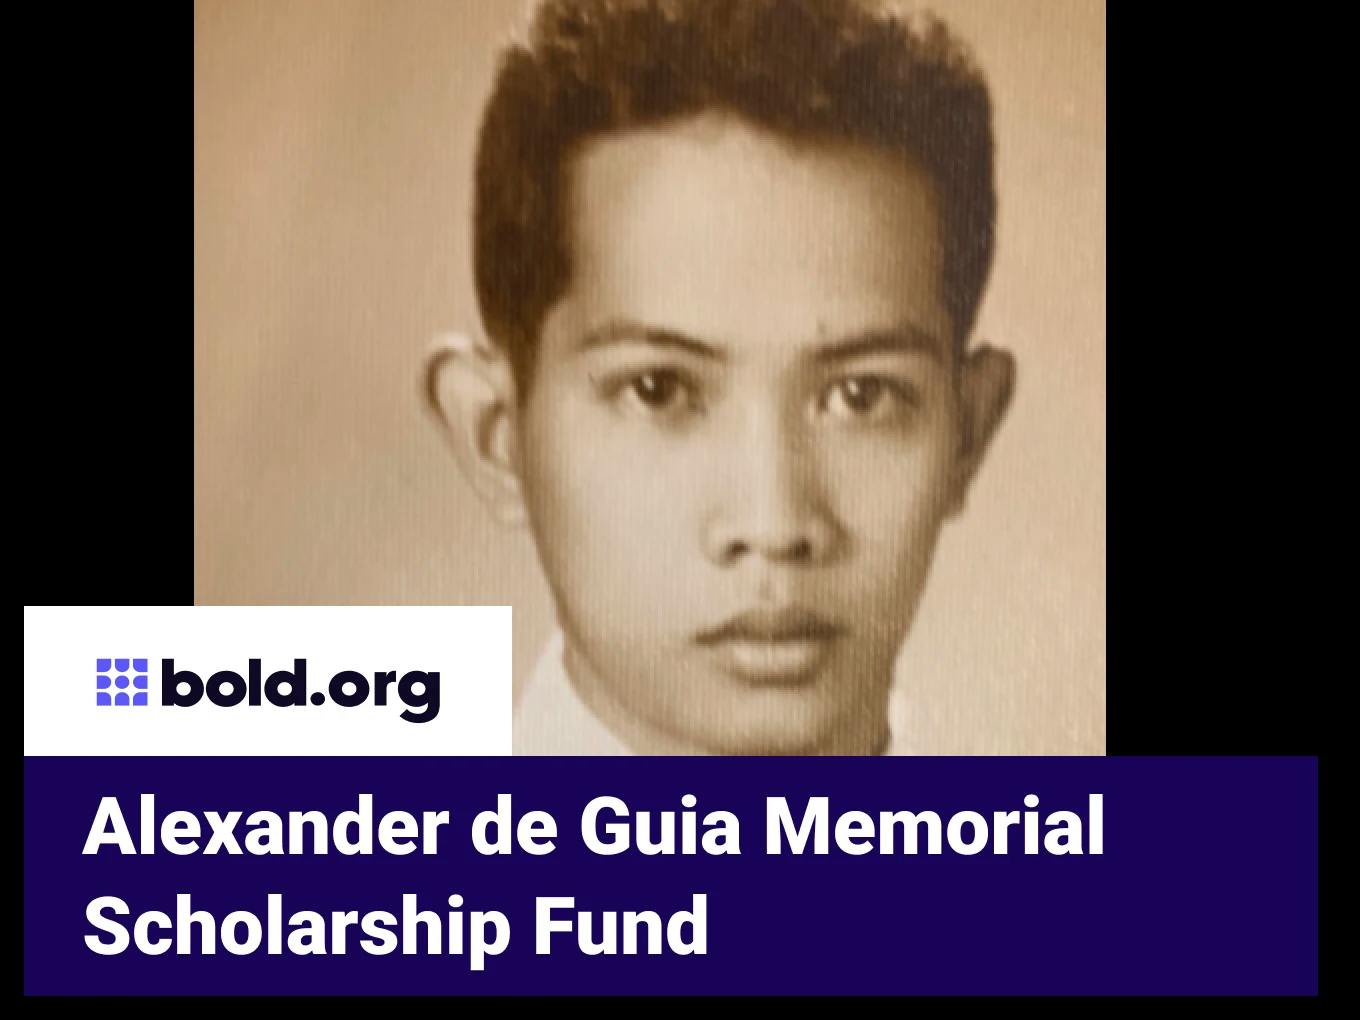 Alexander de Guia Memorial Scholarship Fund